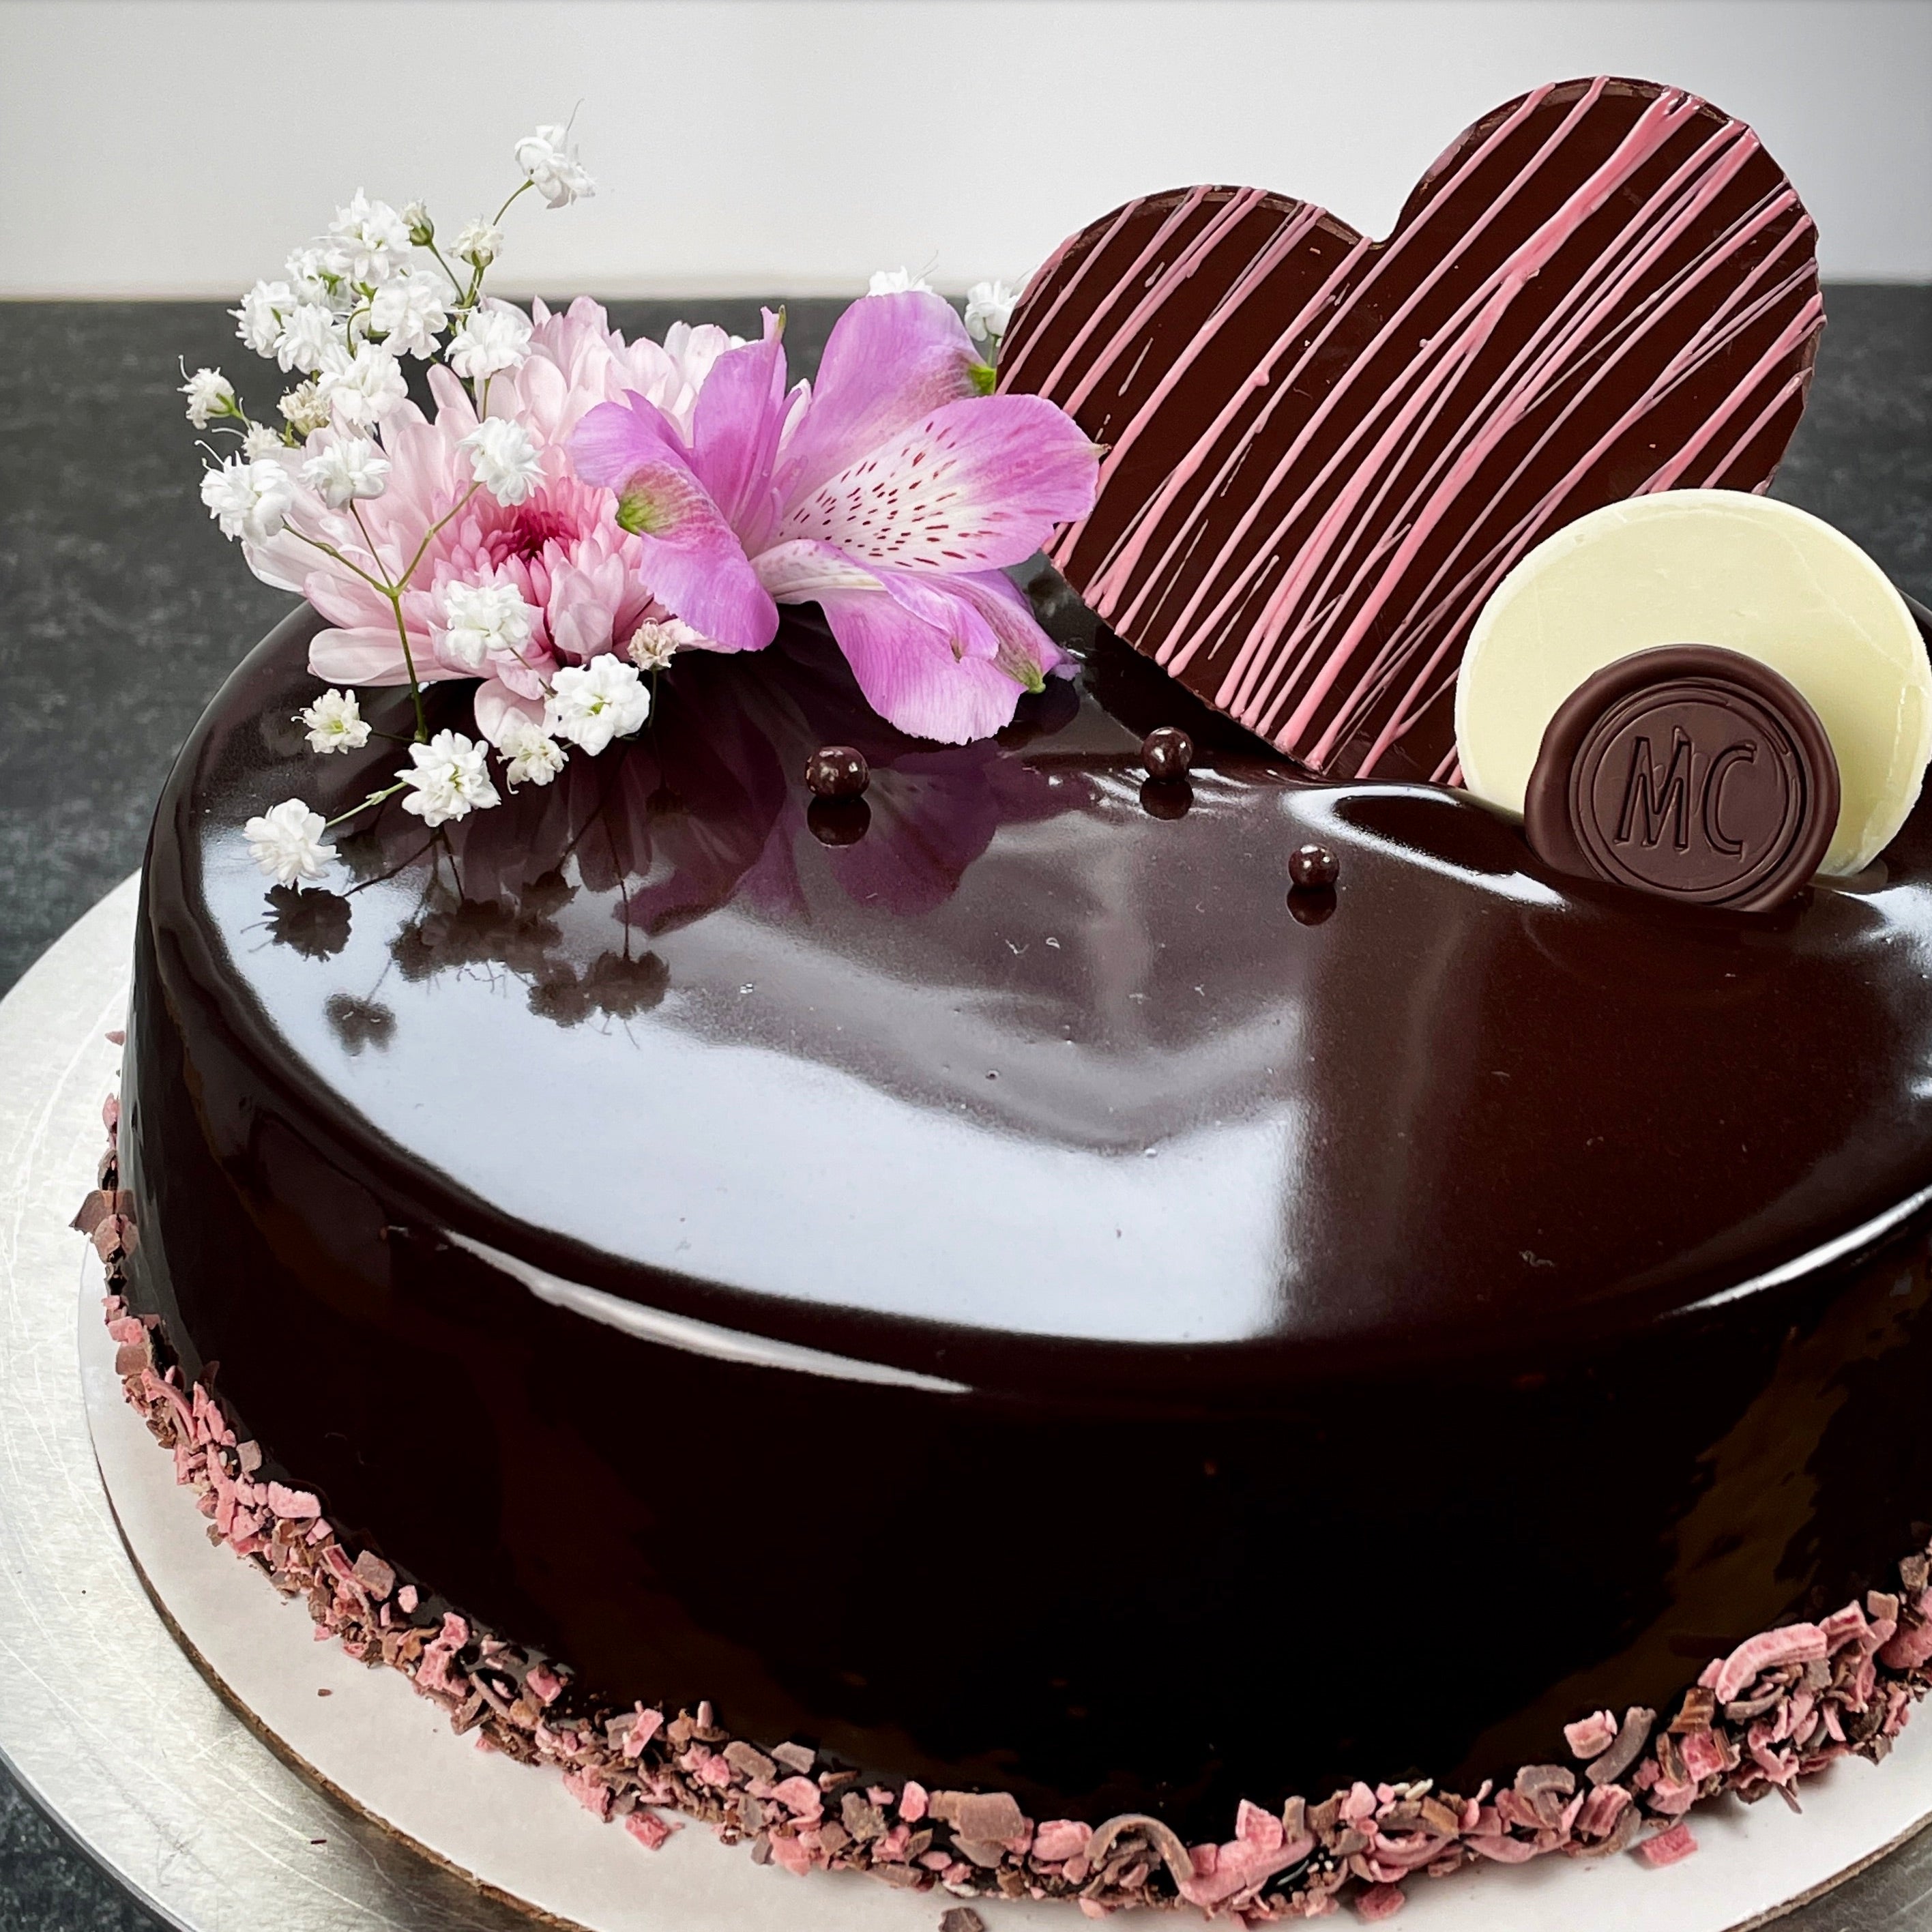 Hand-Made Chocolate Heart on Top of Cake